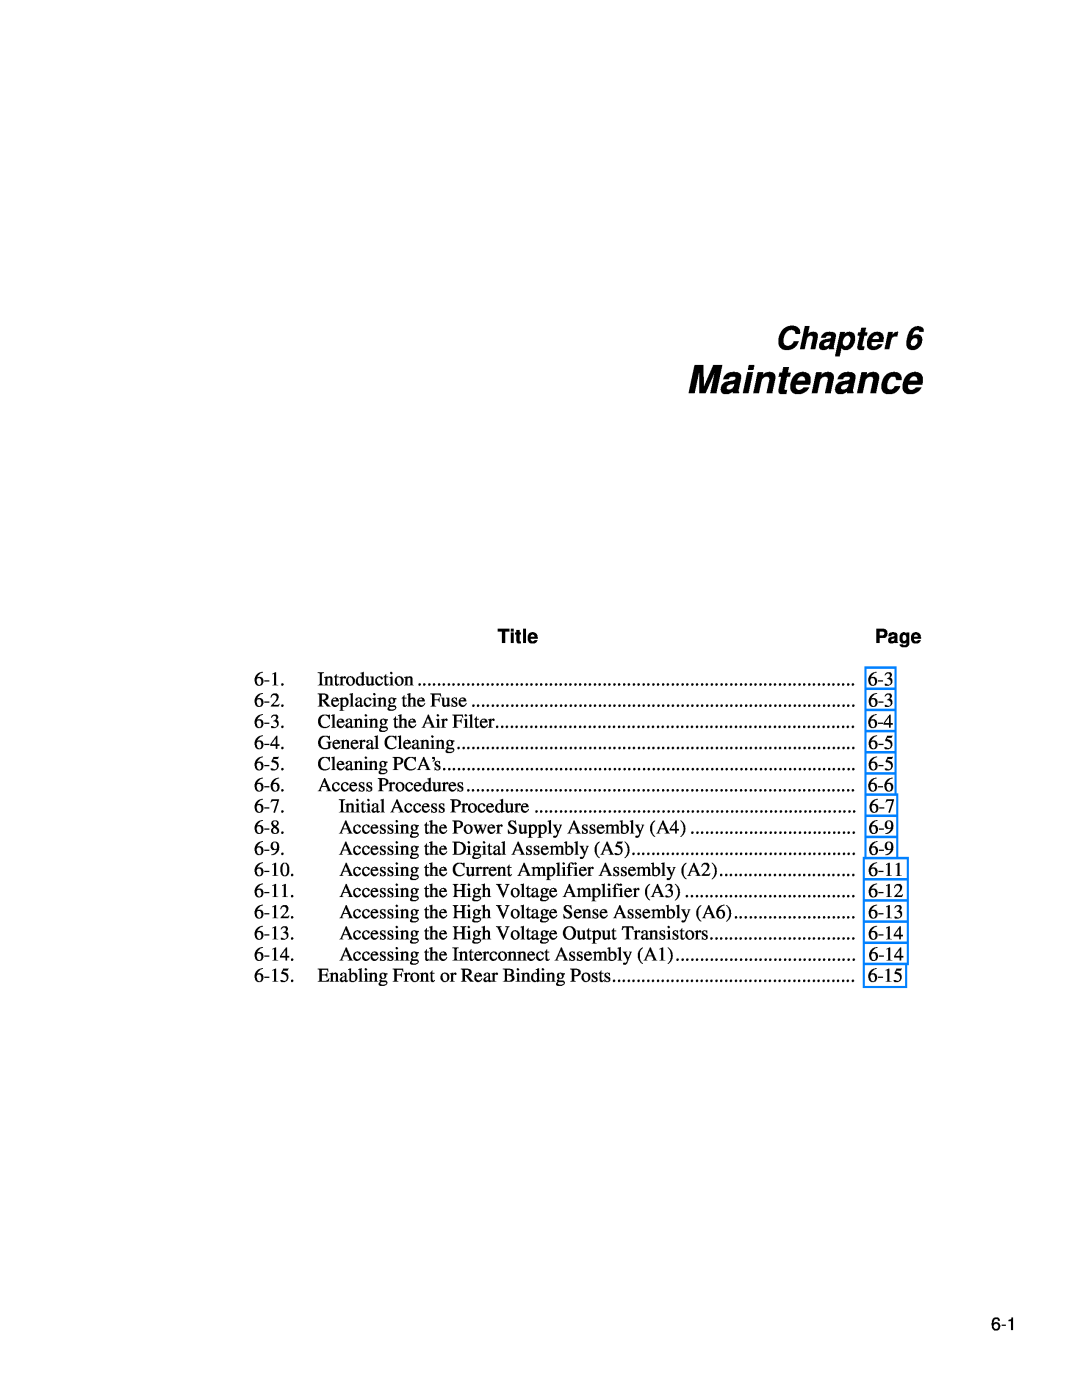 Fluke 5725A instruction manual Maintenance, Chapter 